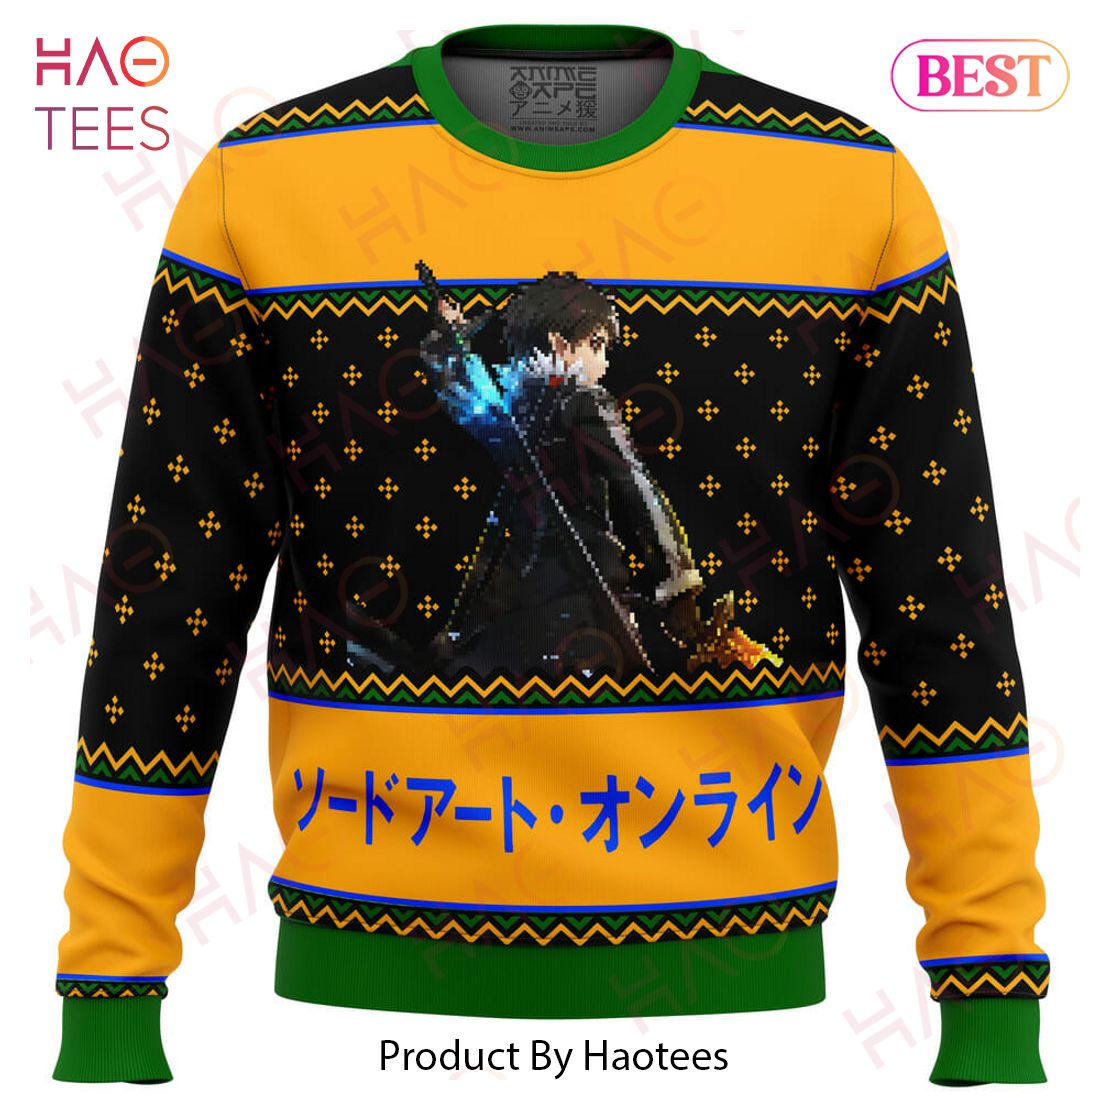 Sword Art Online Beater Ugly Christmas Sweater